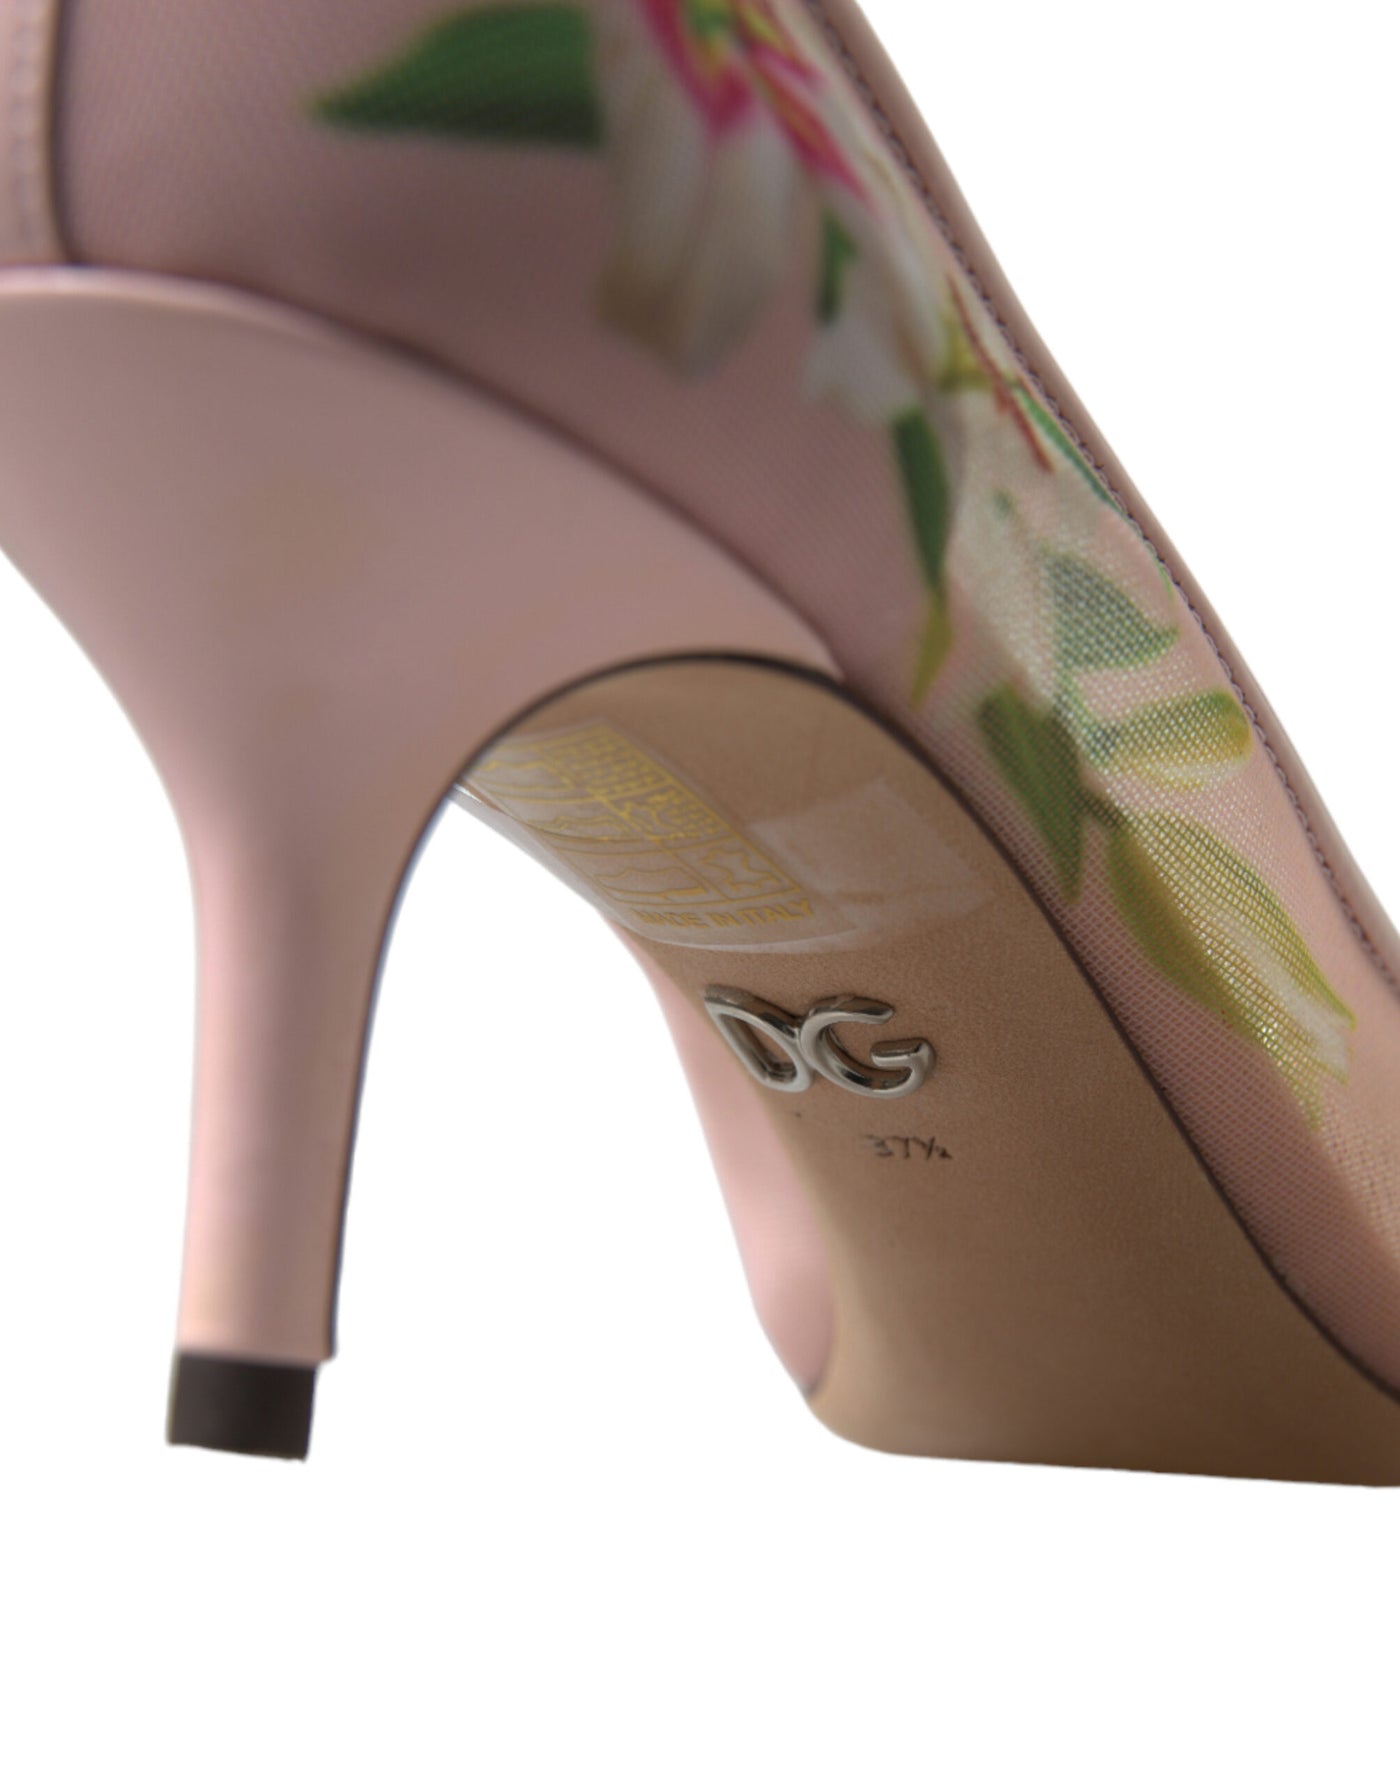 Pink Floral Crystal Heels Pumps Shoes